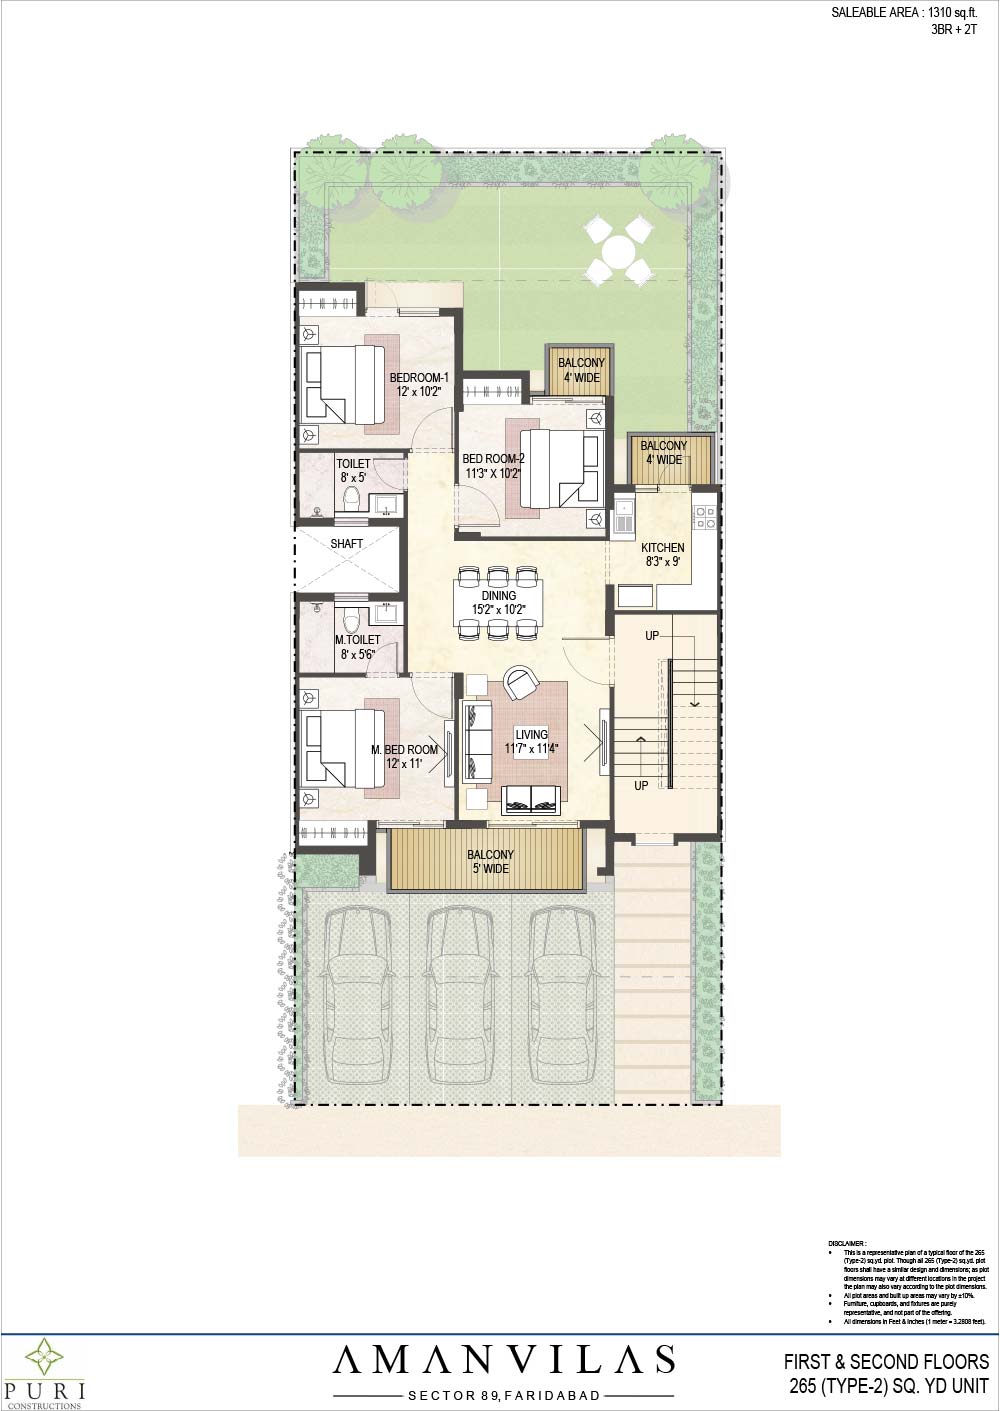 Floor Plan of 265 sq.yd. Type 2 Puri AmanVilas Faridabad